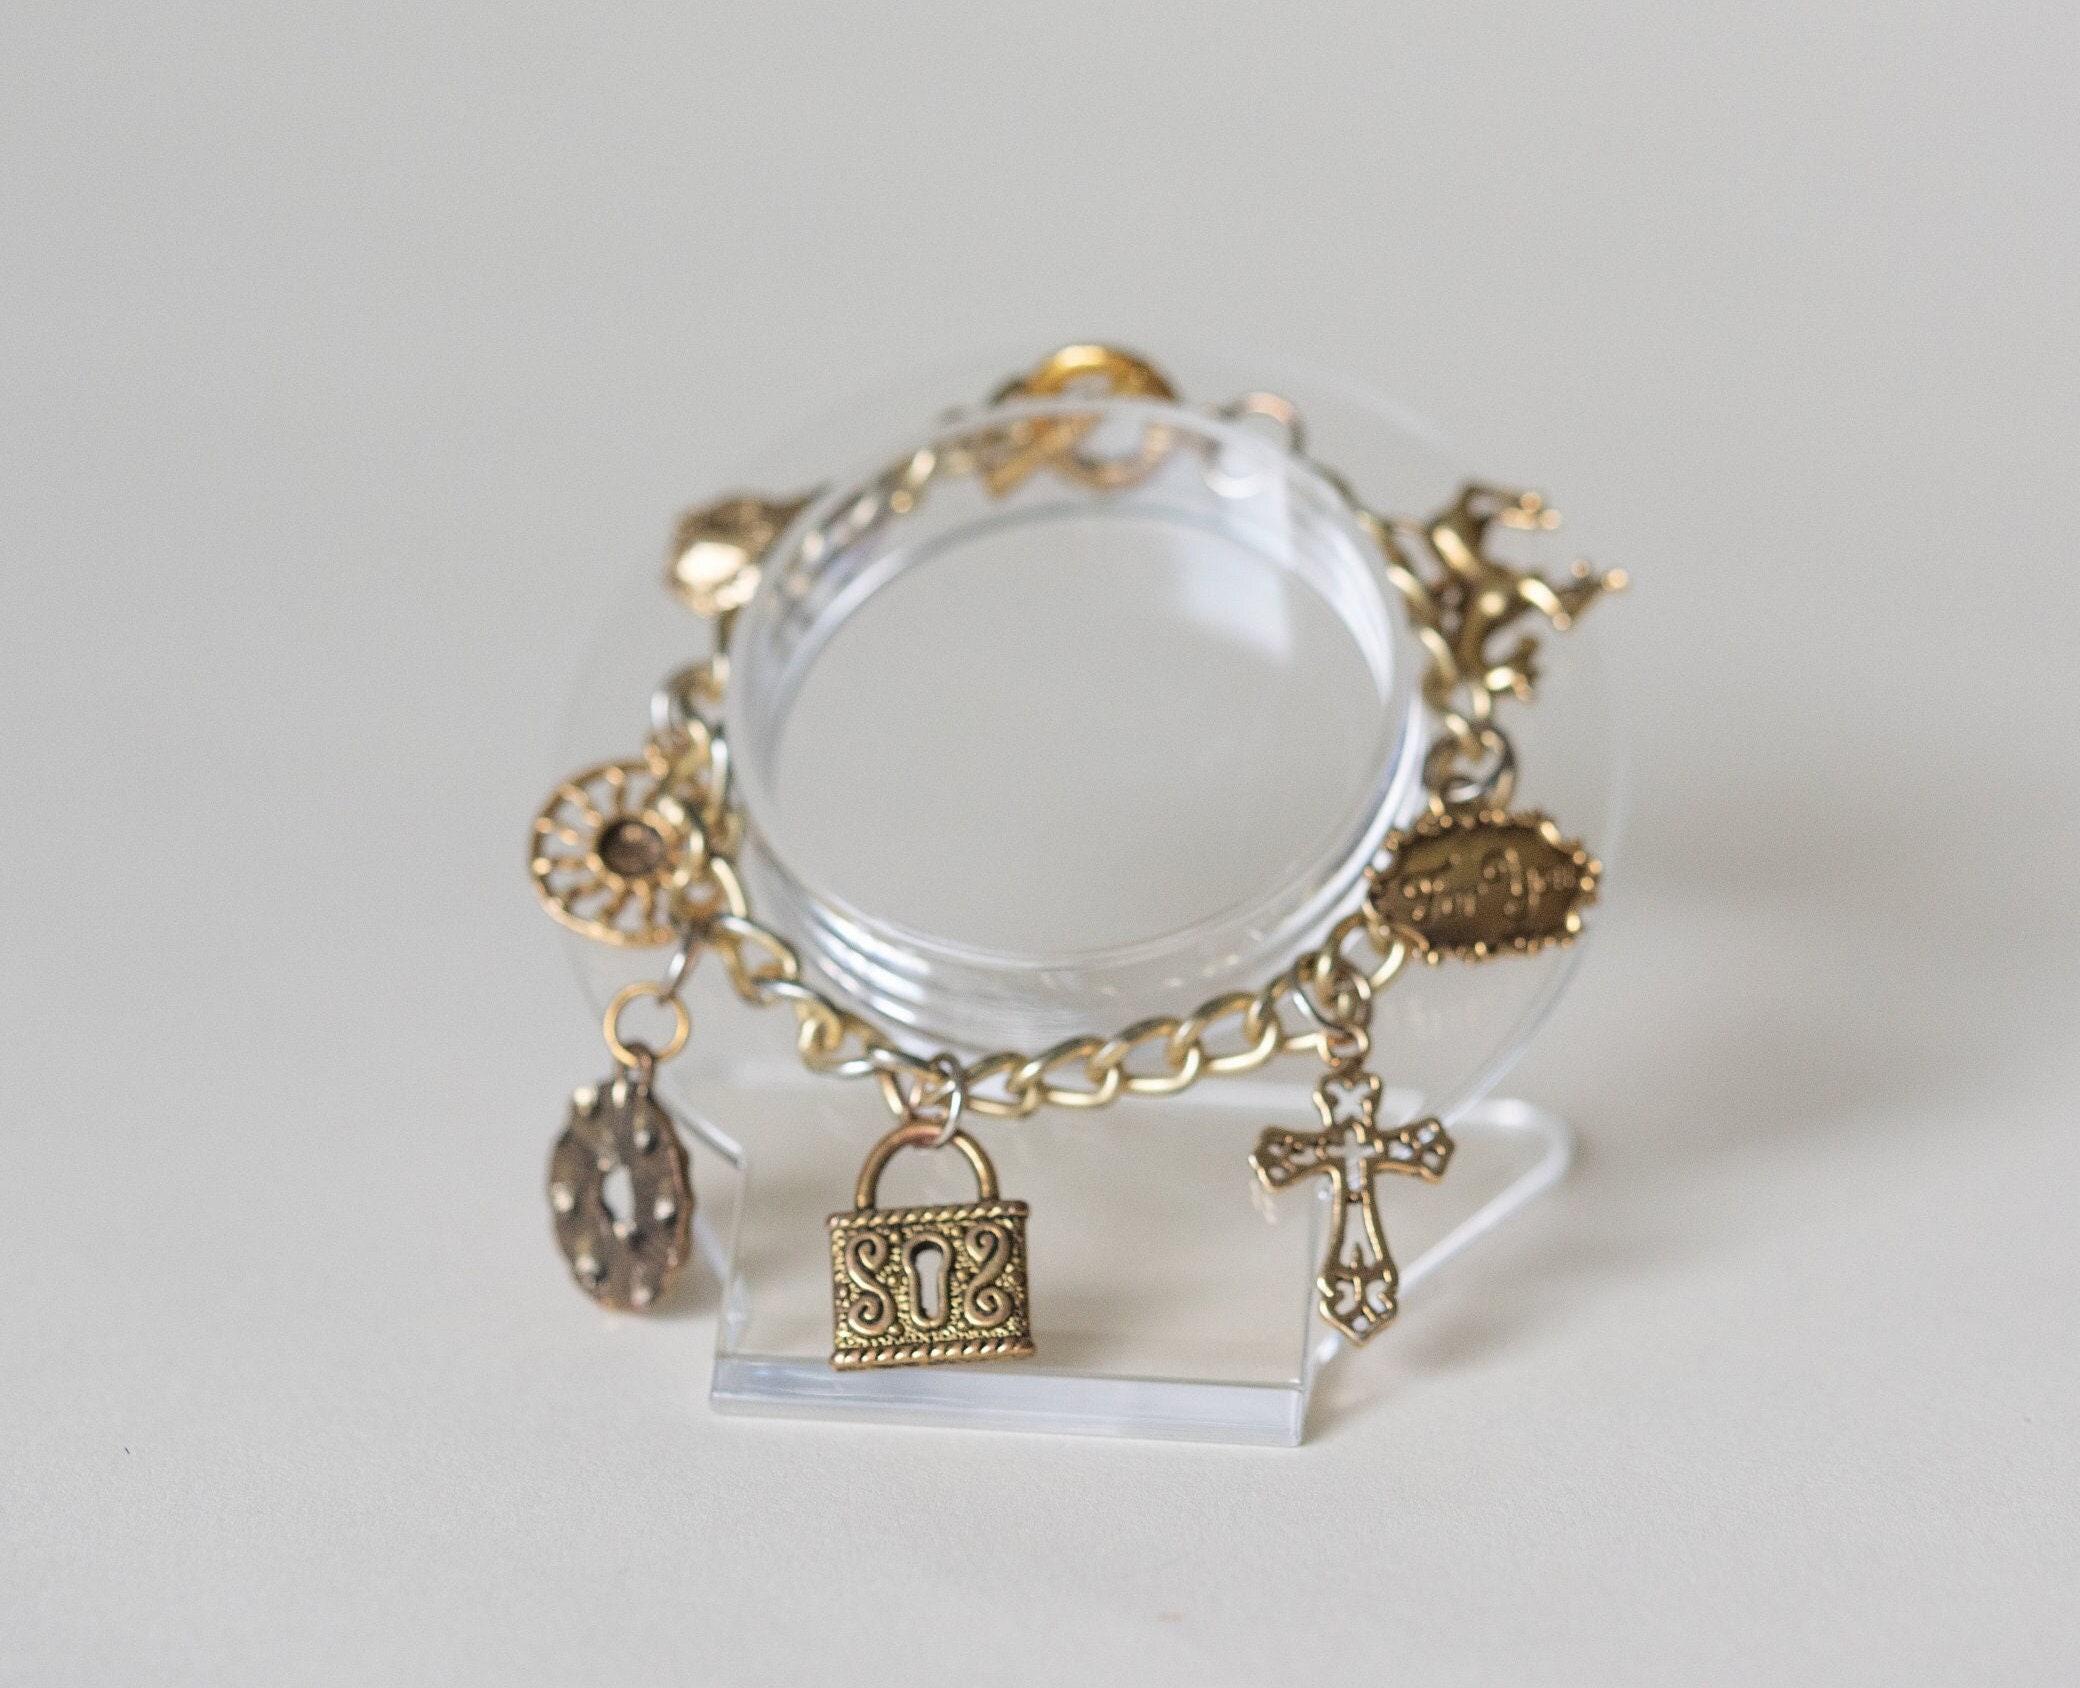 Chanel Vintage Charm Bracelet - Gold-Plated Charm, Bracelets - CHA855485